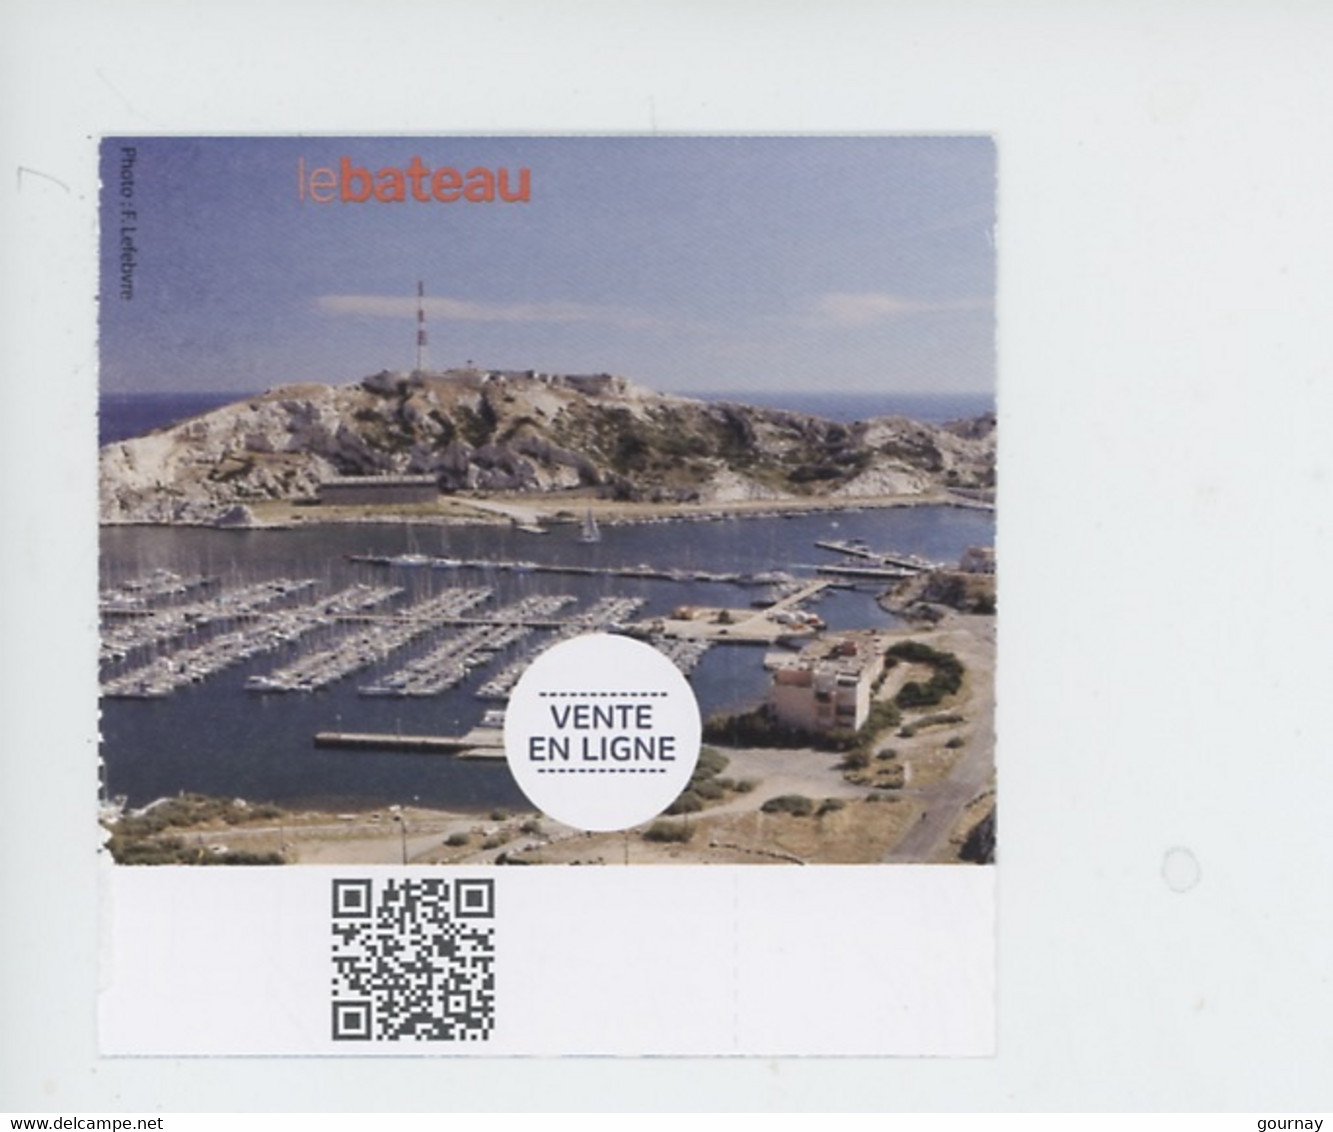 Marseille Le Frioul : Ticket Titre De Transport Lebateau (les Iles) - Europe